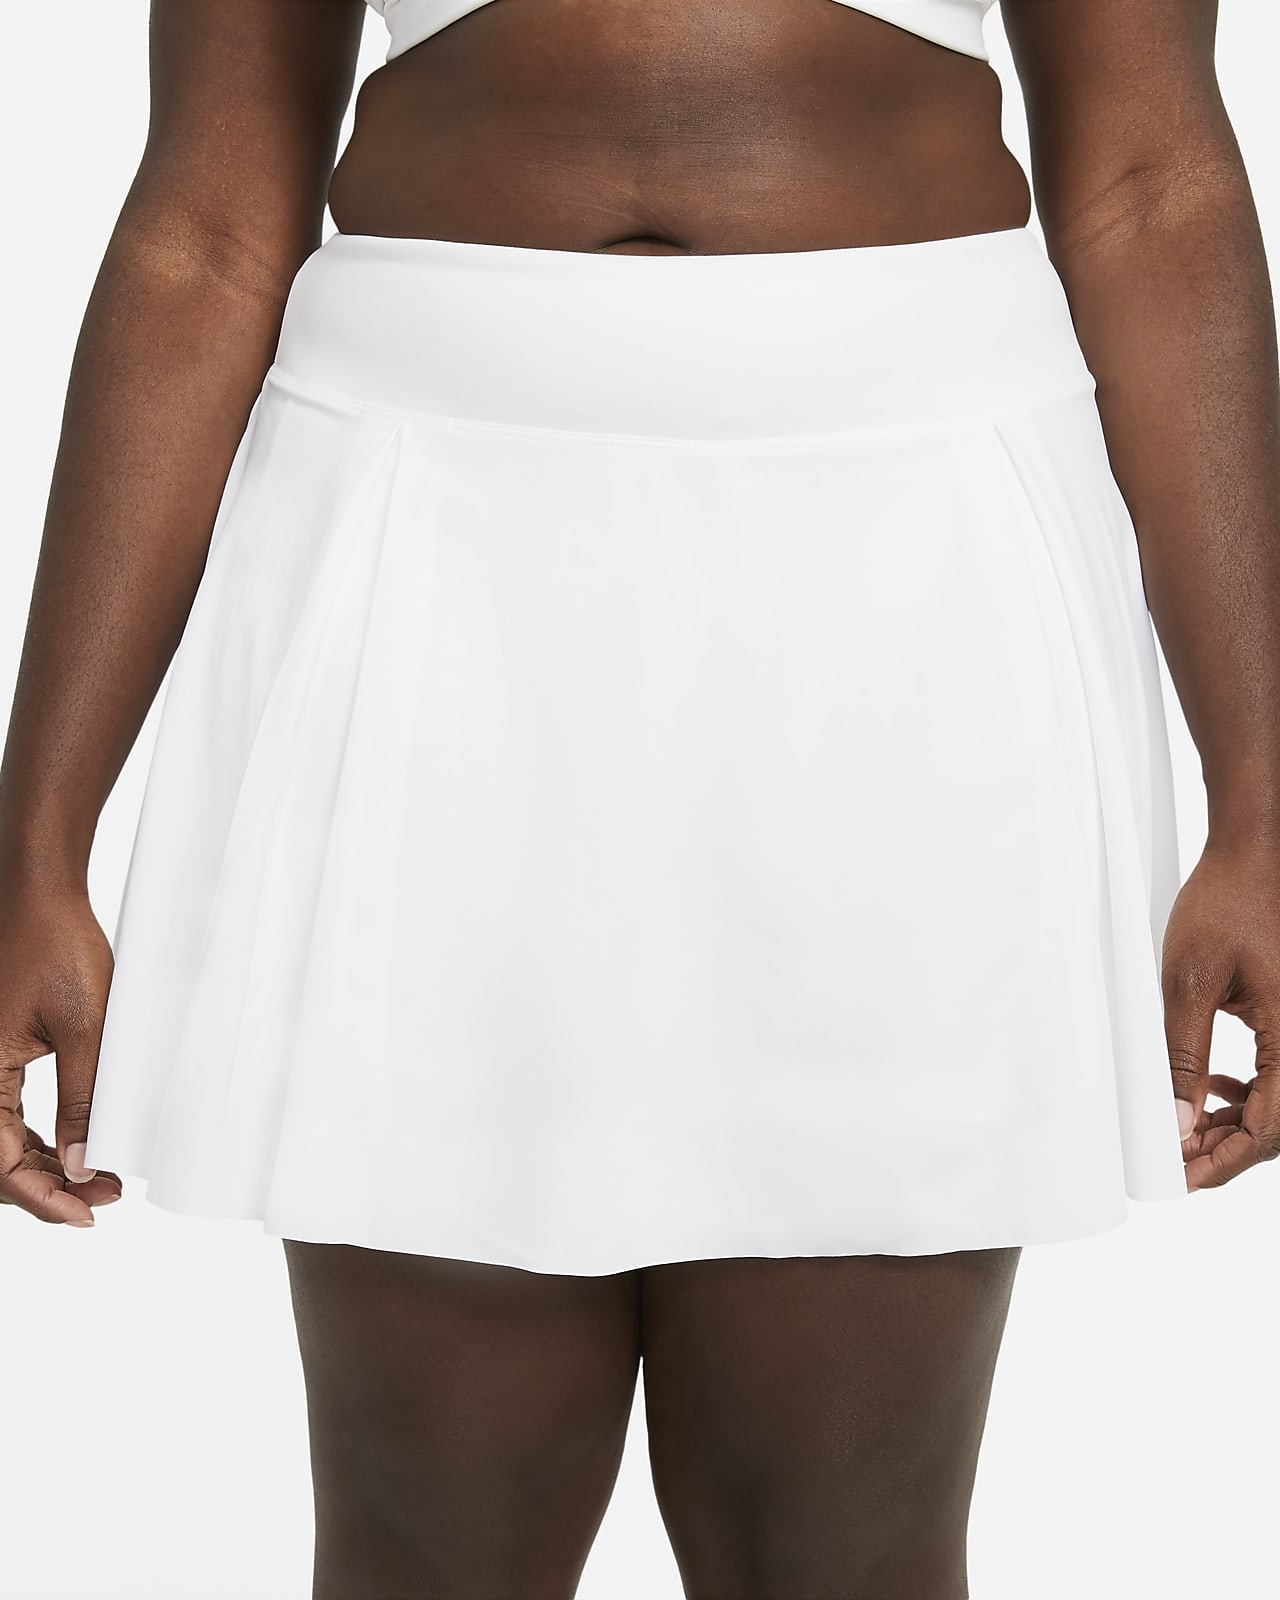 Nike Club Skirt Women's Regular Golf Skirt (Plus Size). Nike.com